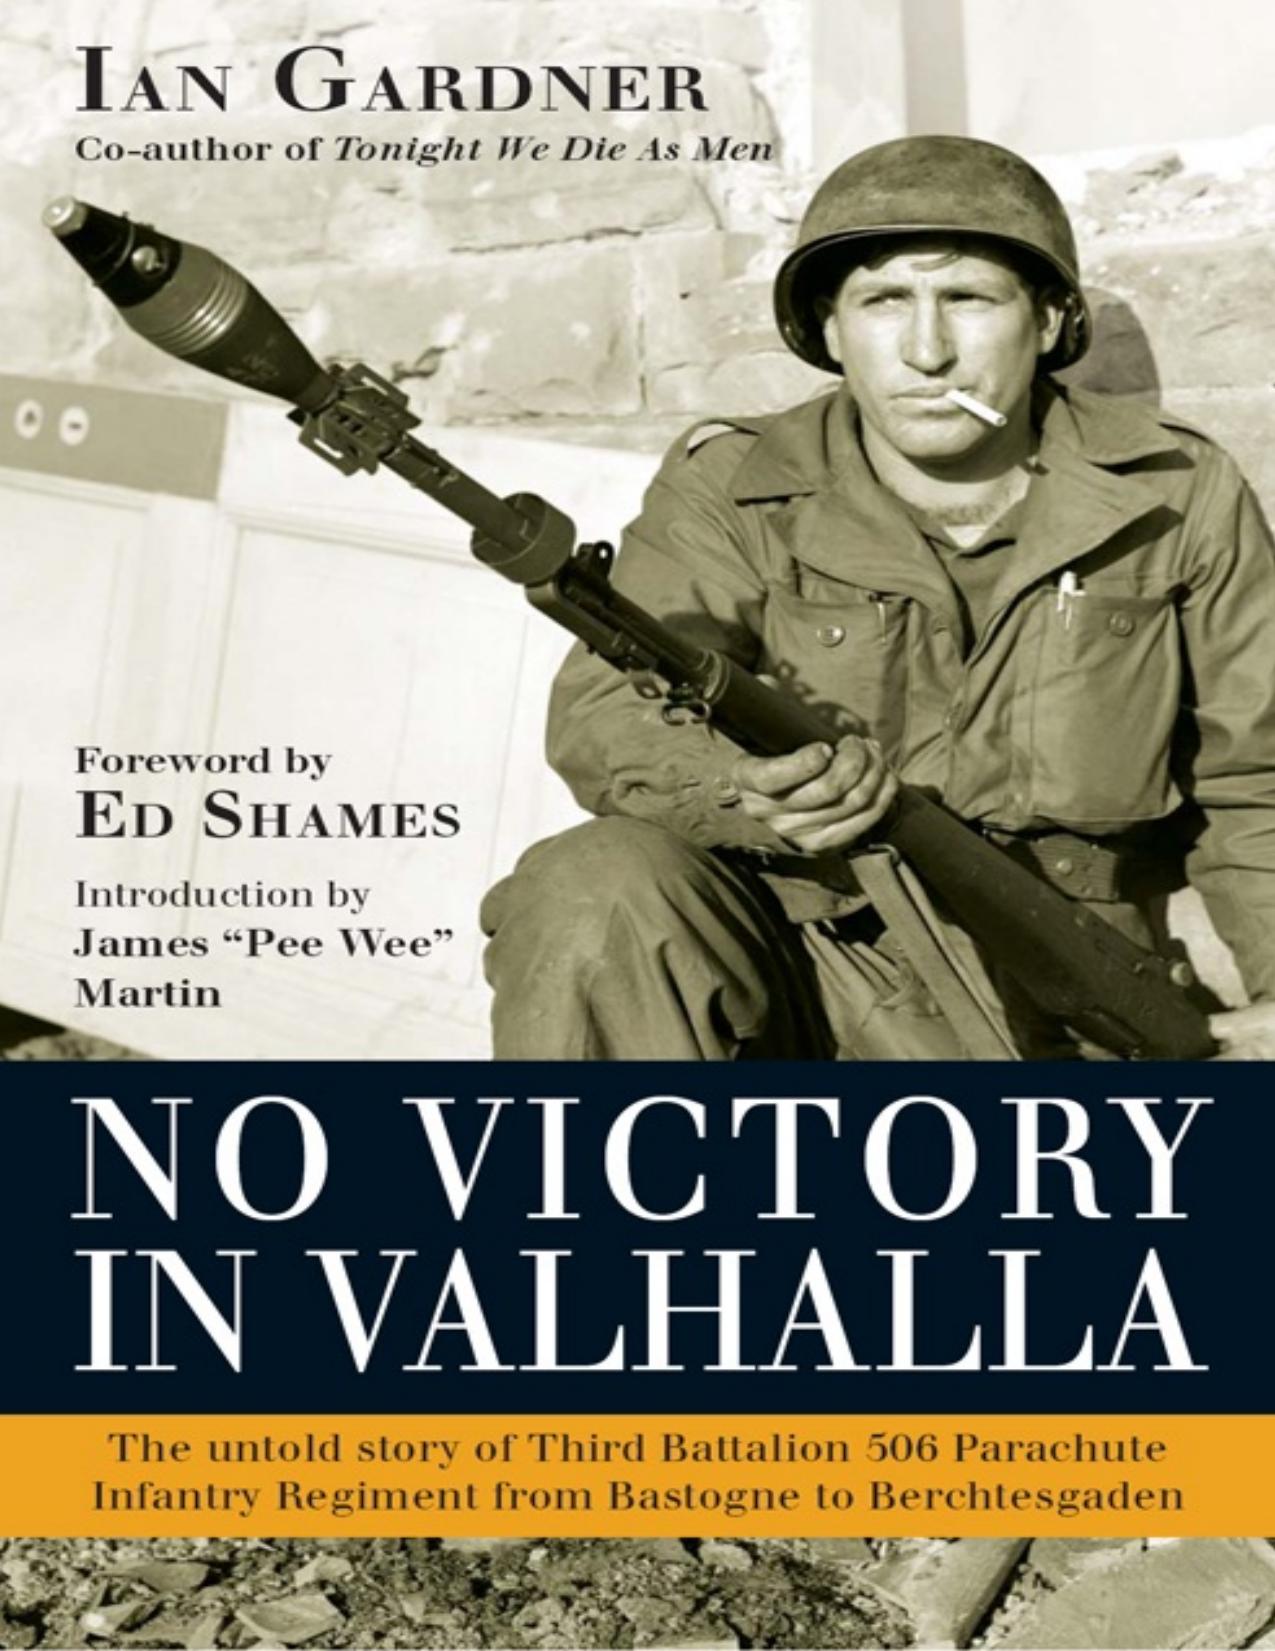 No Victory in Valhalla by Ian Gardner